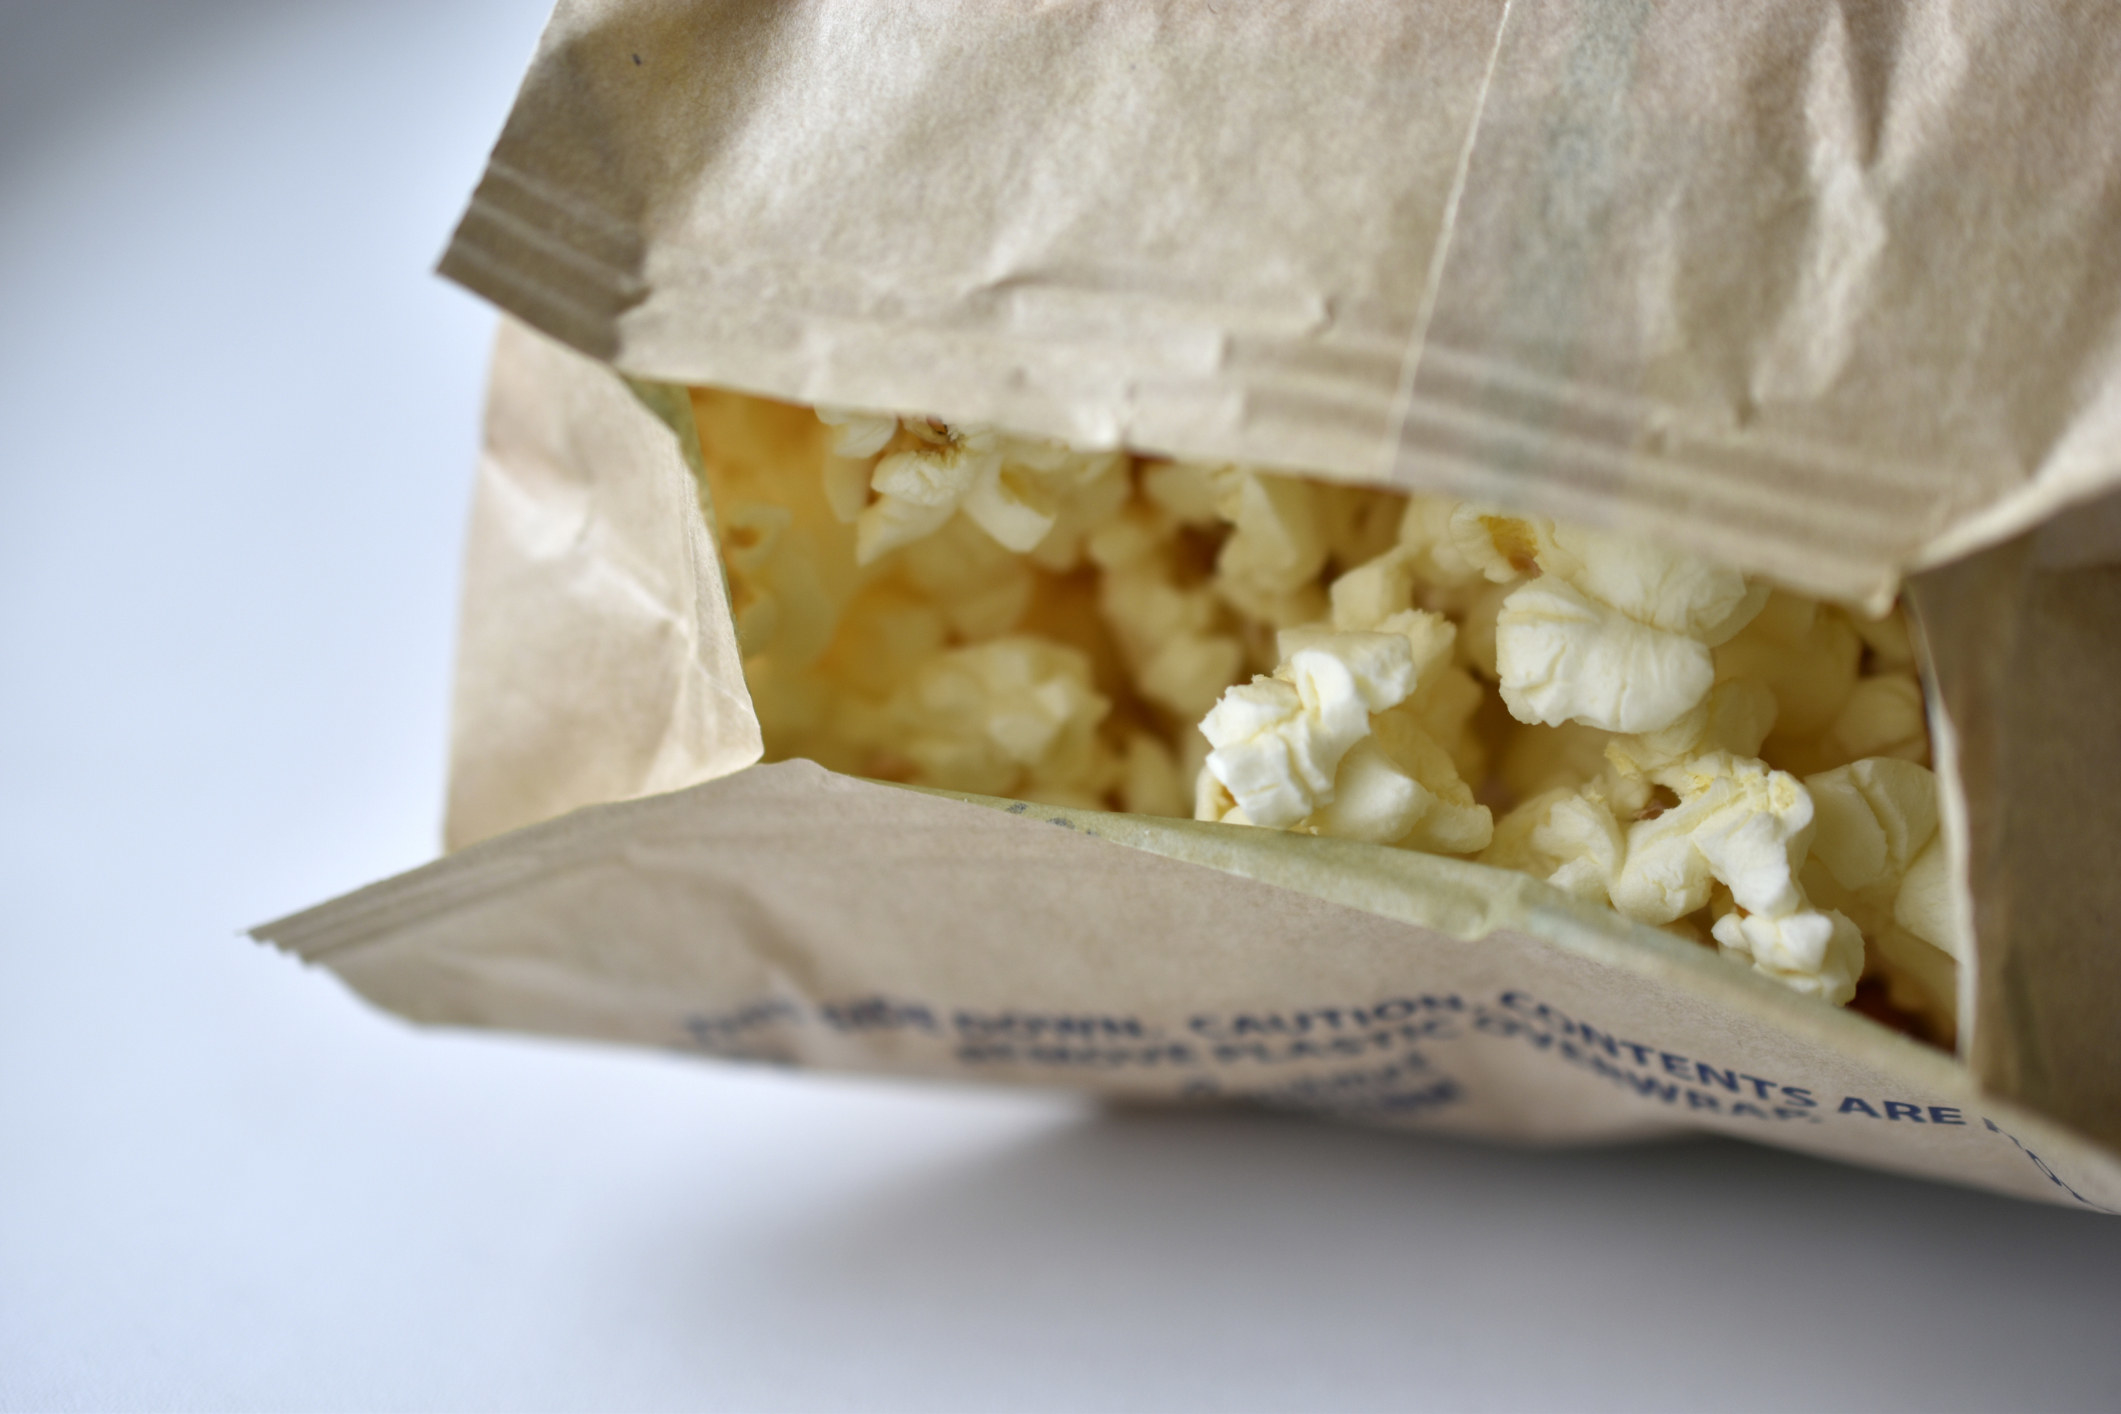 A bag of microwave popcorn.